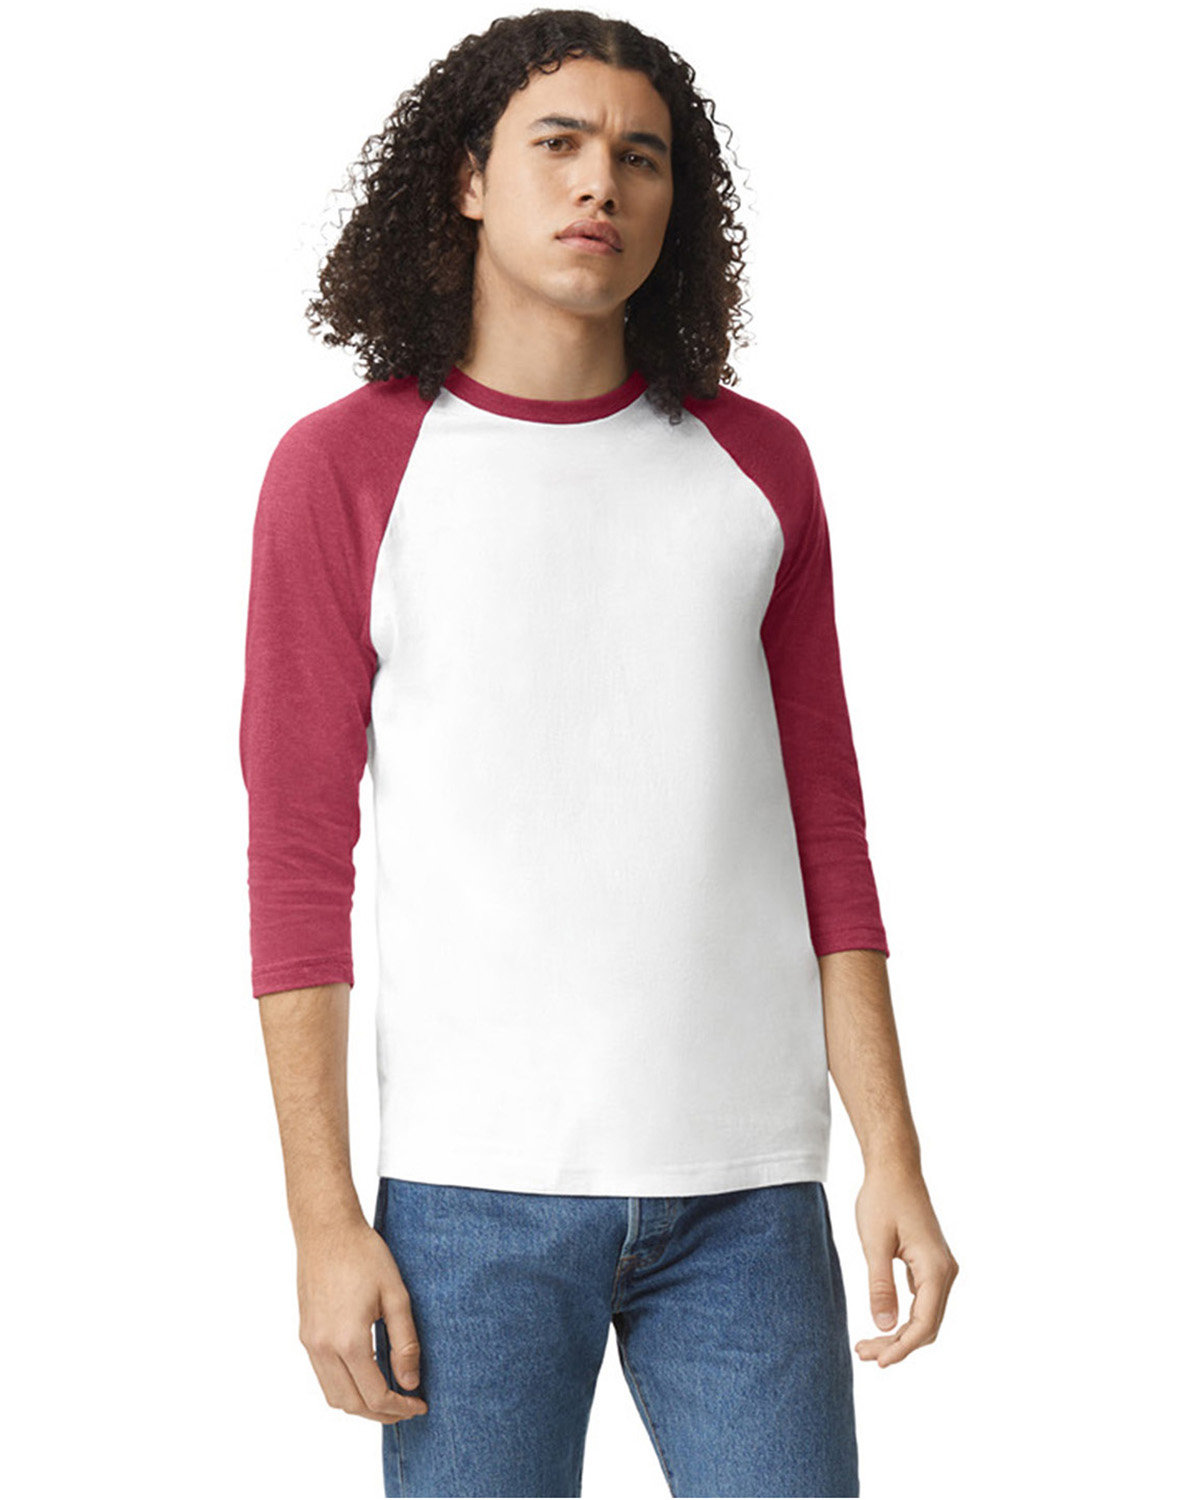 American Apparel Unisex CVC Raglan T-Shirt WHITE/ HTR CRDNL 